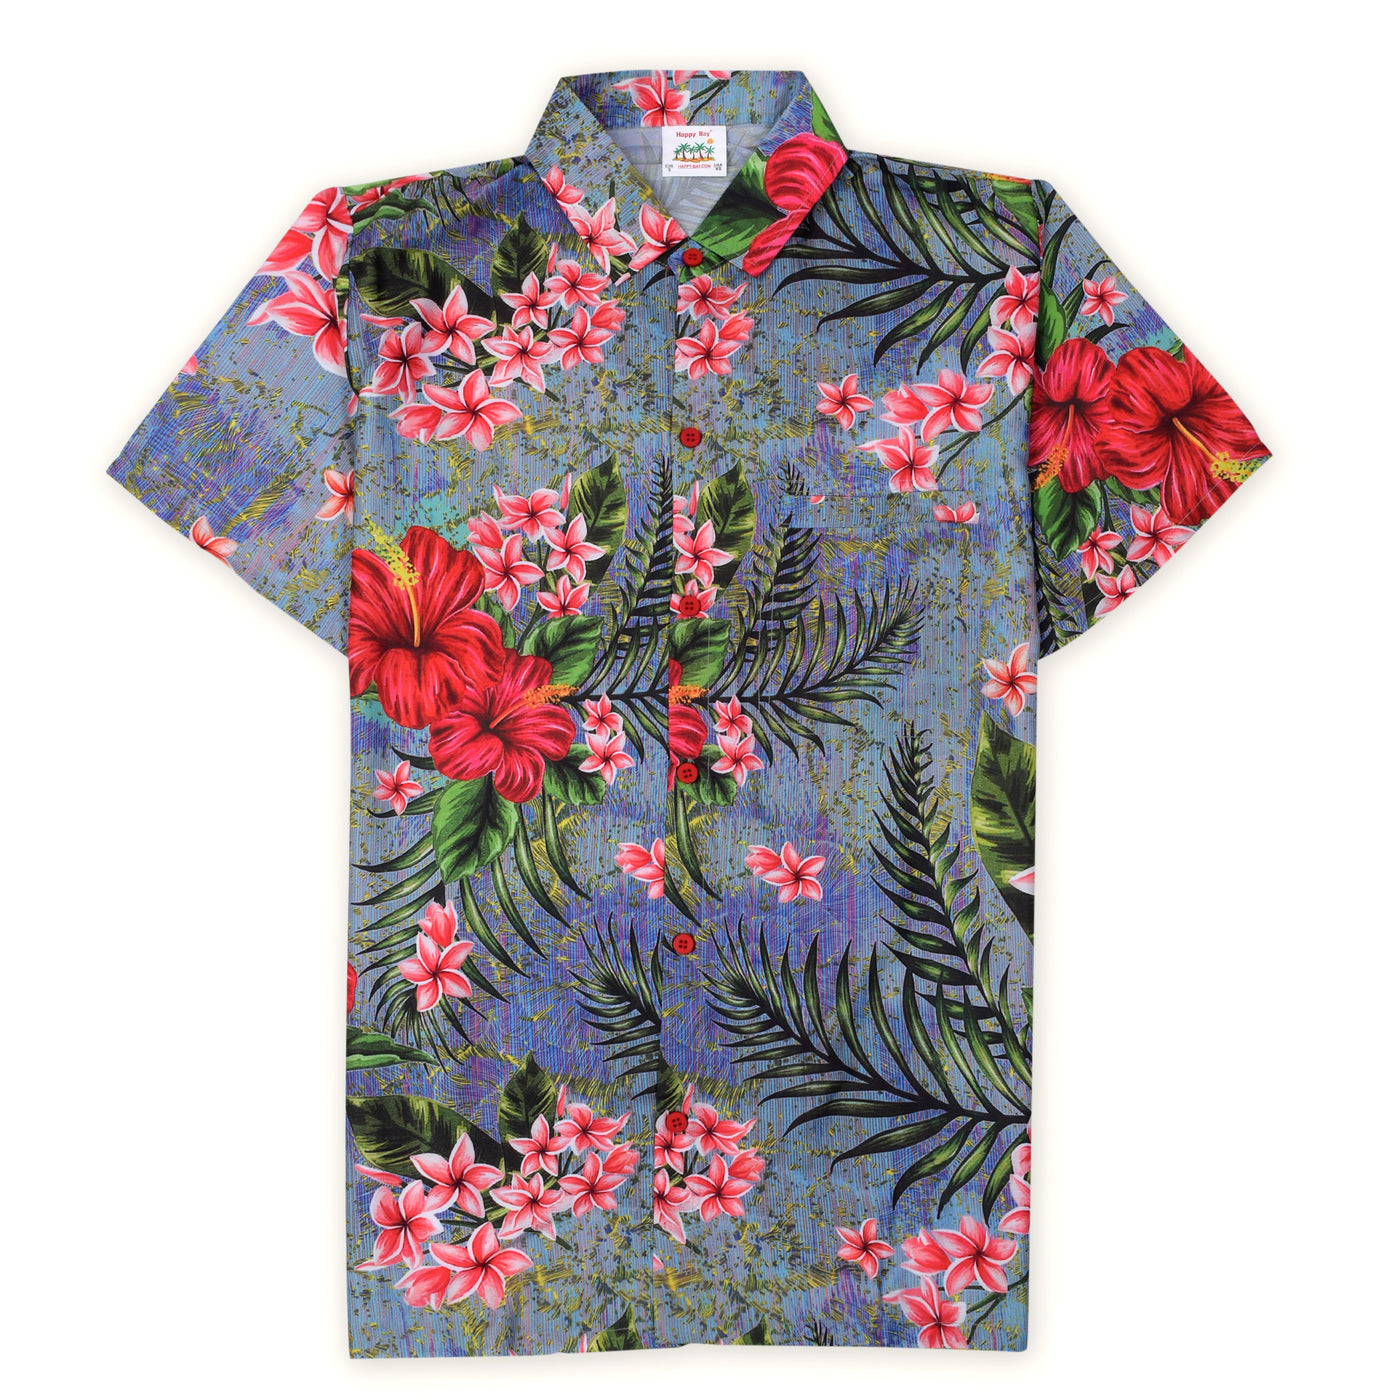 Buy now flower power hawaiian shirt